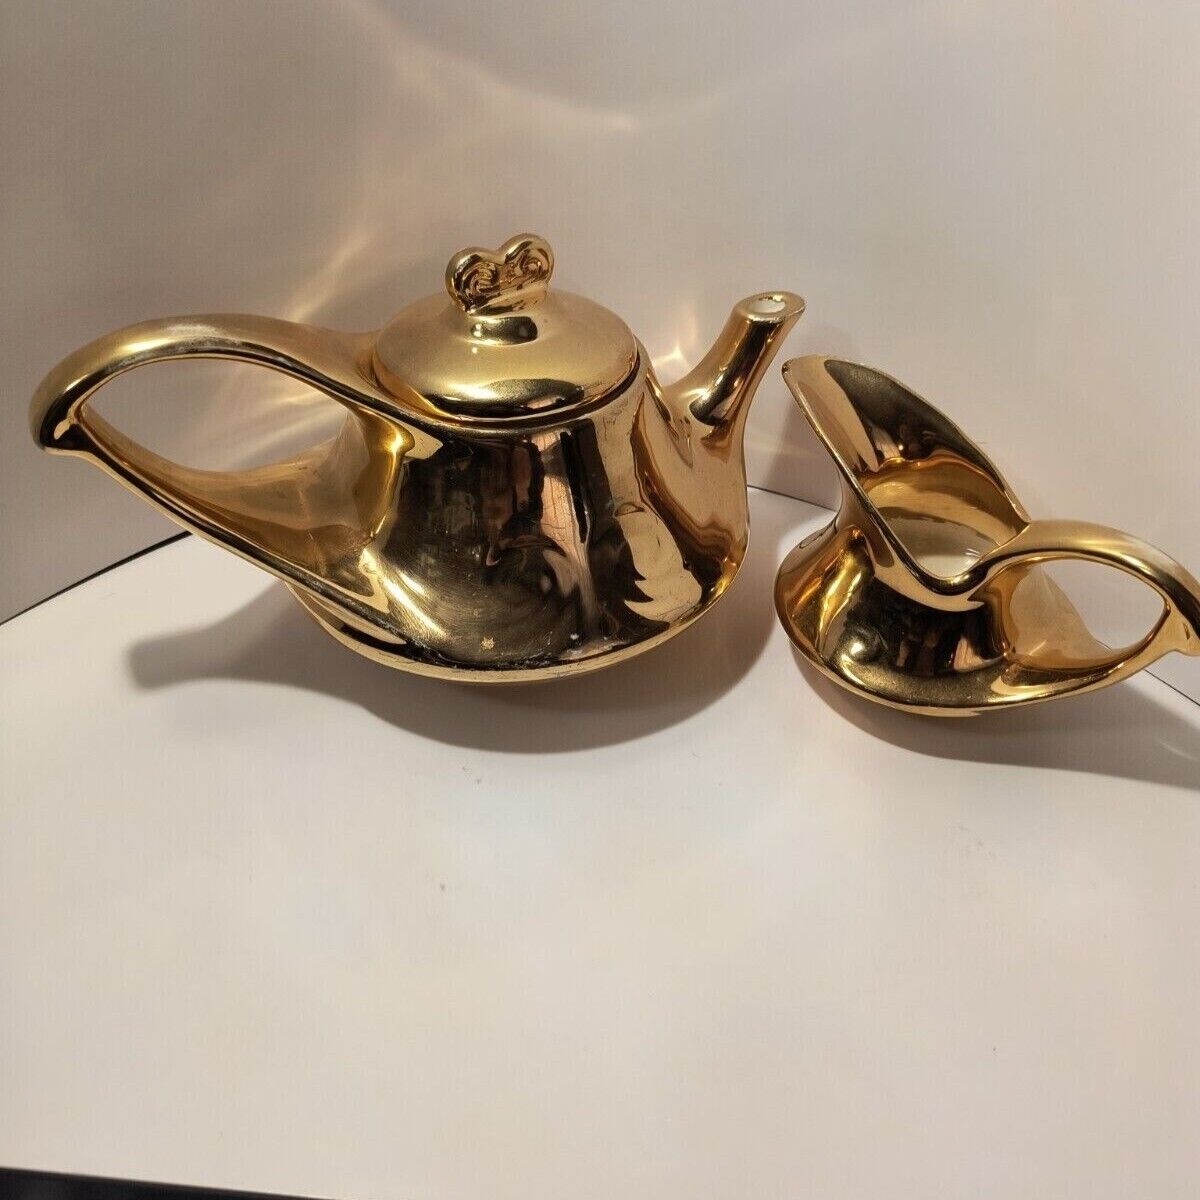 Warranted 22k Gold 202 Art Deco Aladdin Teapot and Creamer